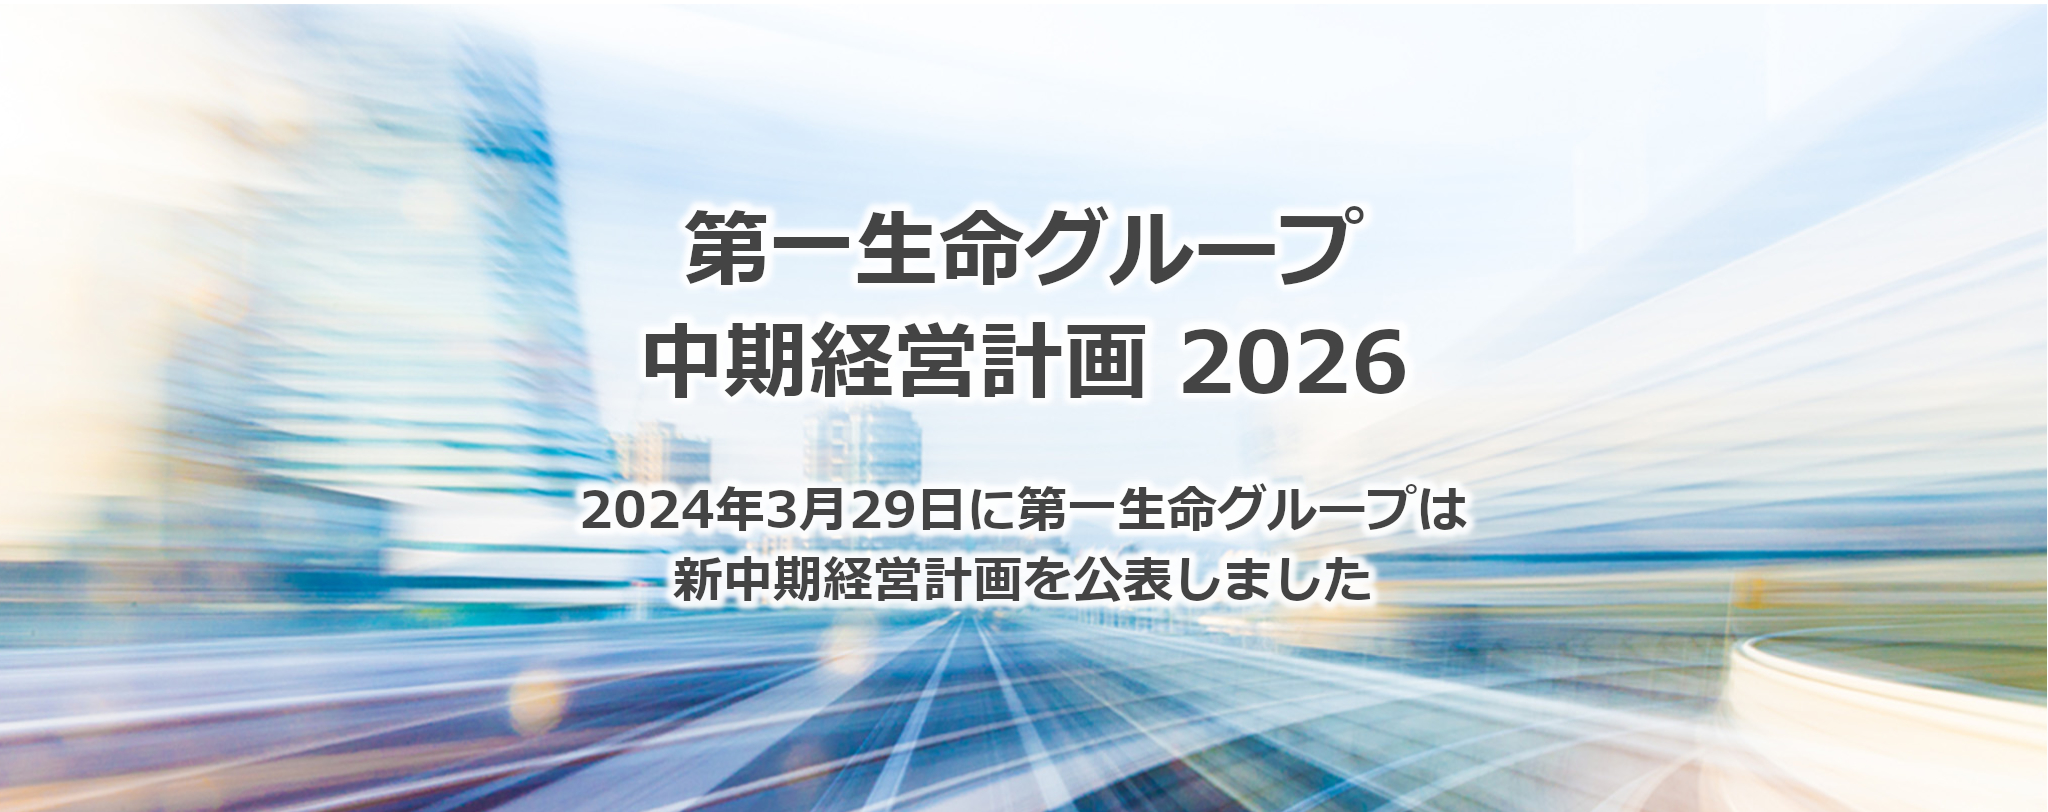 Dai-ichi Life Group Medium-Term Management Plan 2026